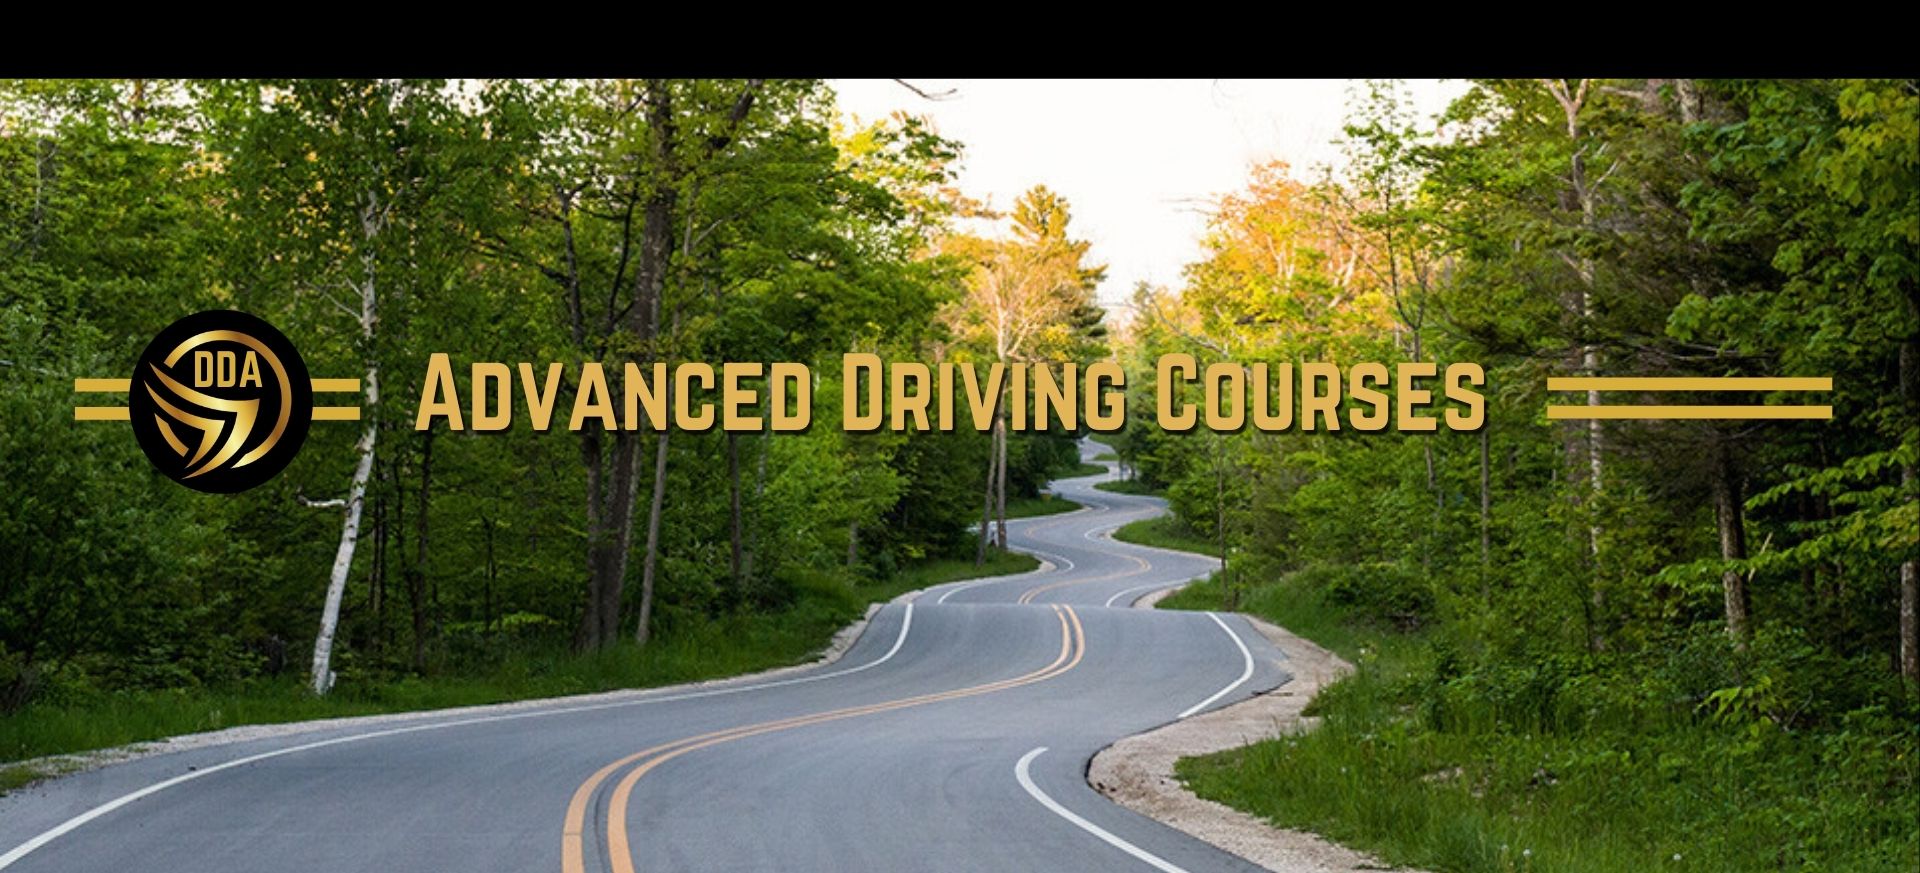 Driving instruction at DDA - training drivers of the future